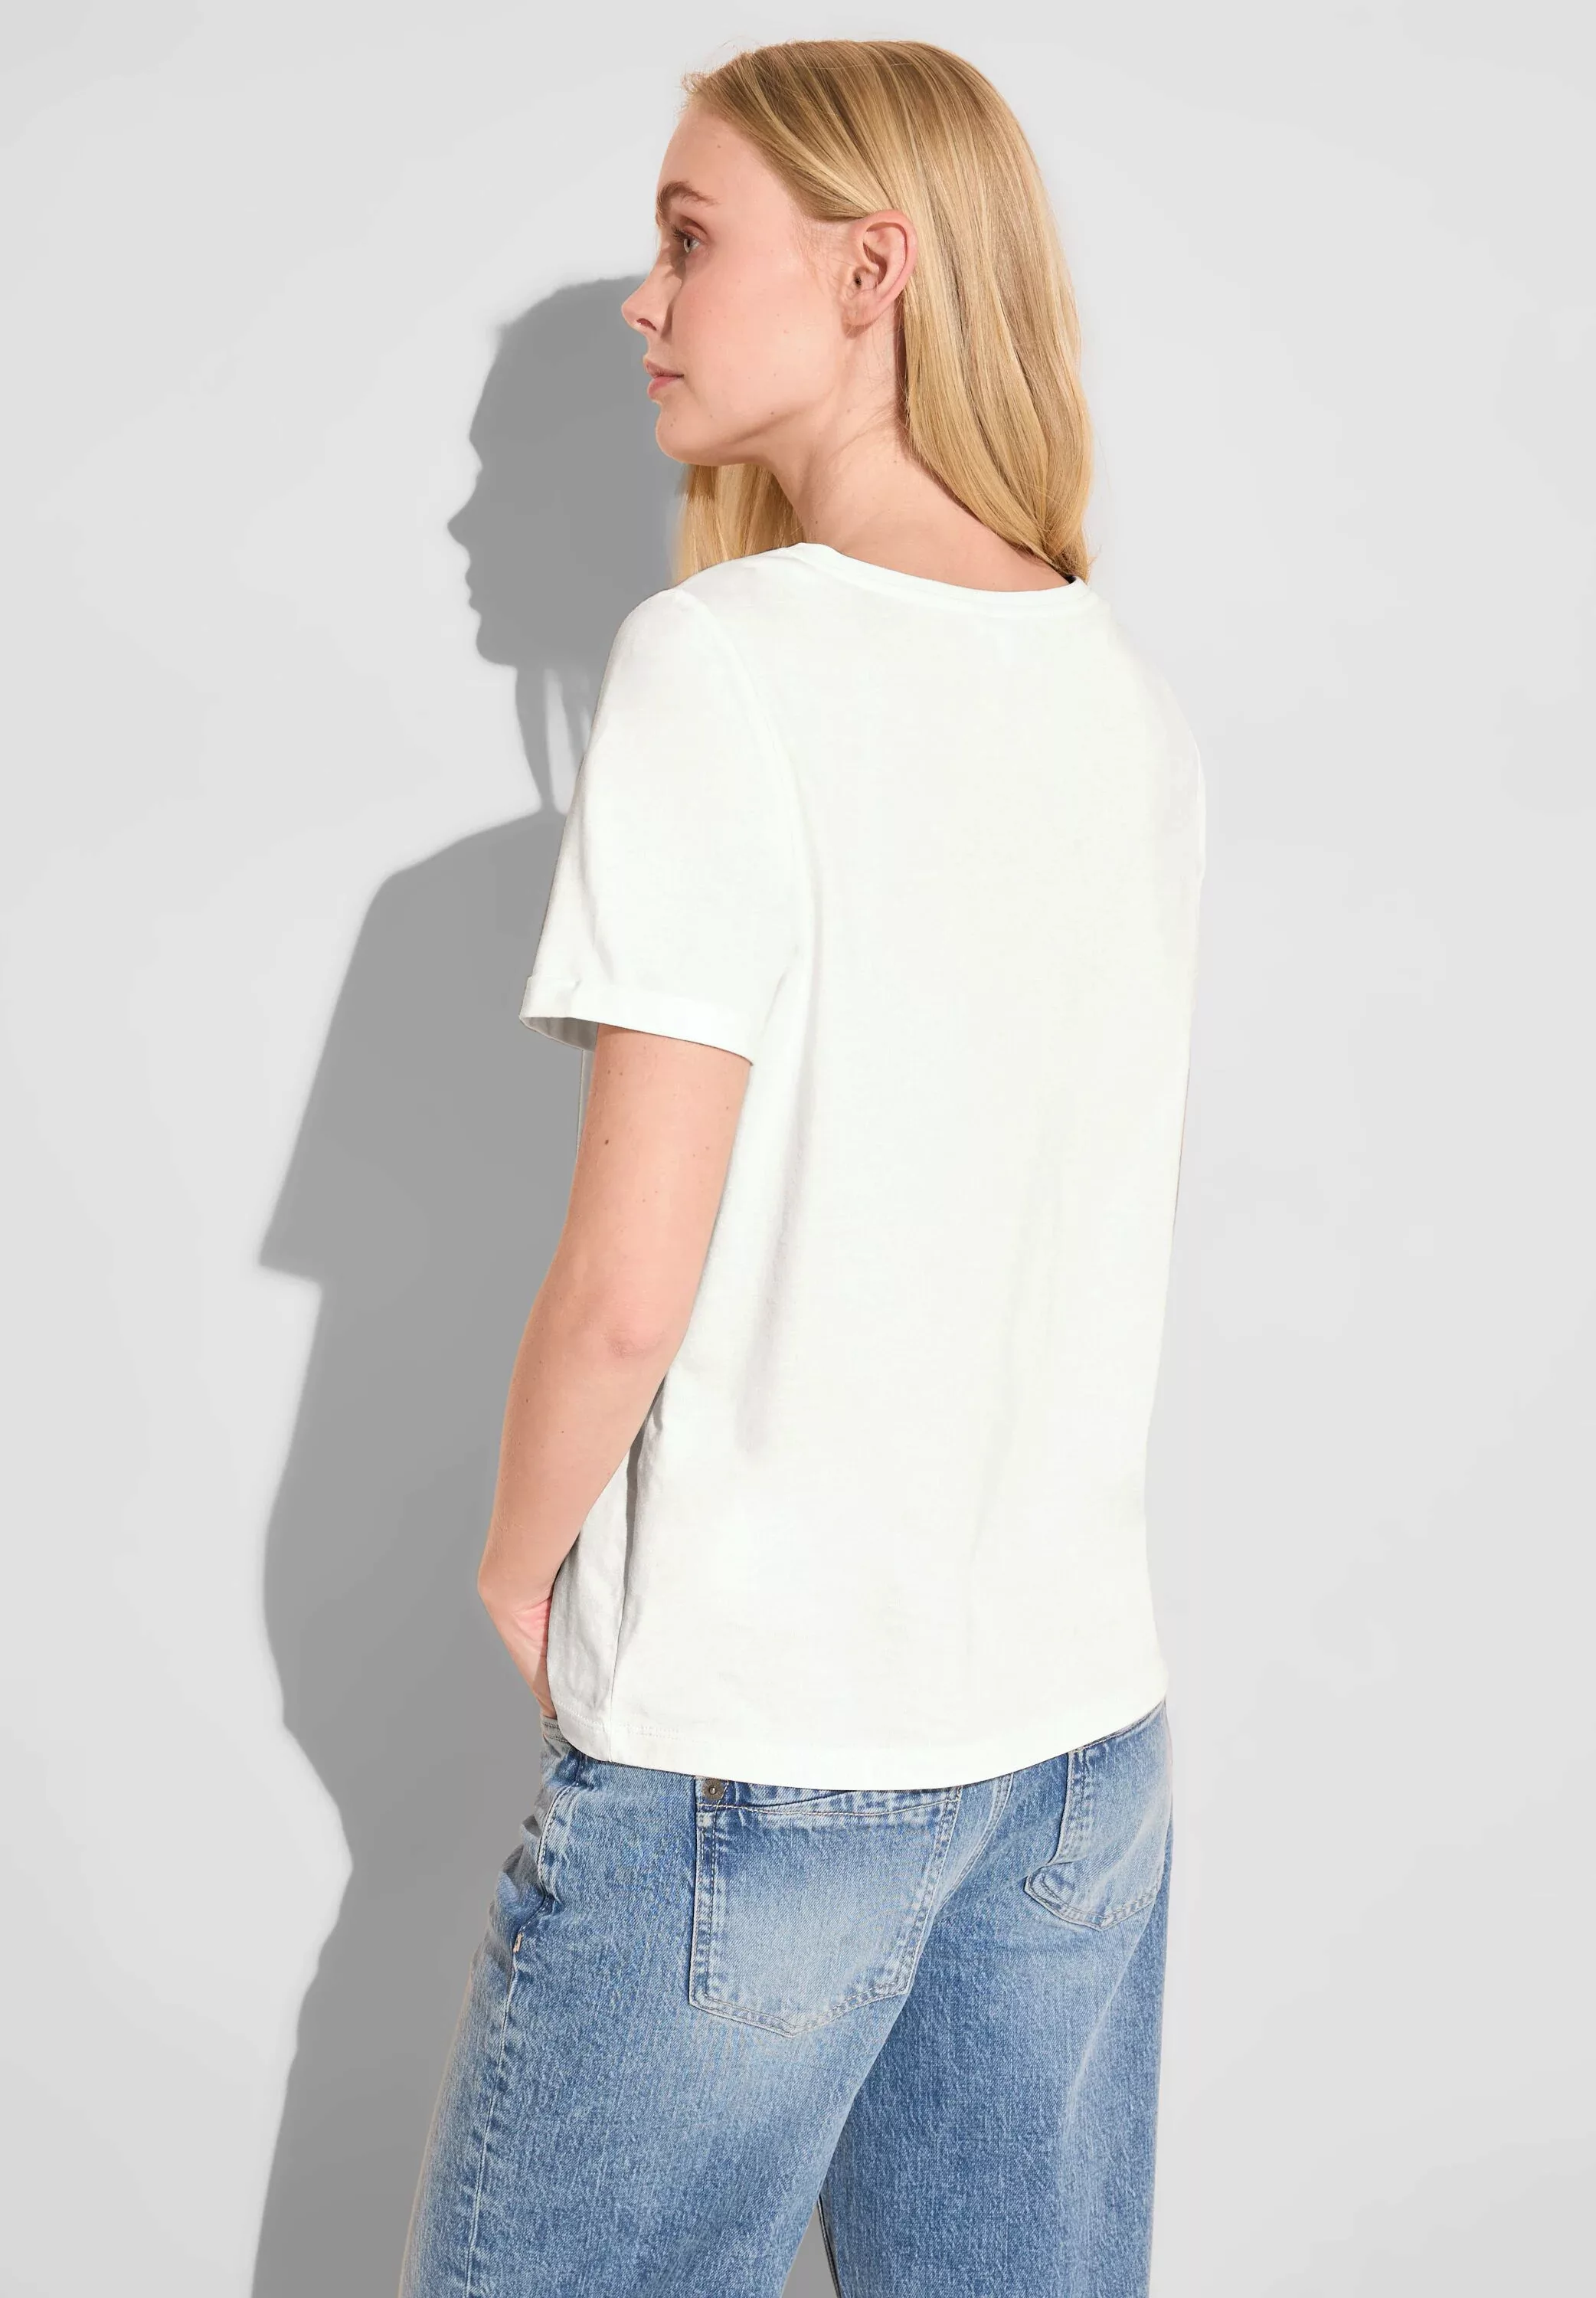 STREET ONE T-Shirt foil brush print shirt günstig online kaufen